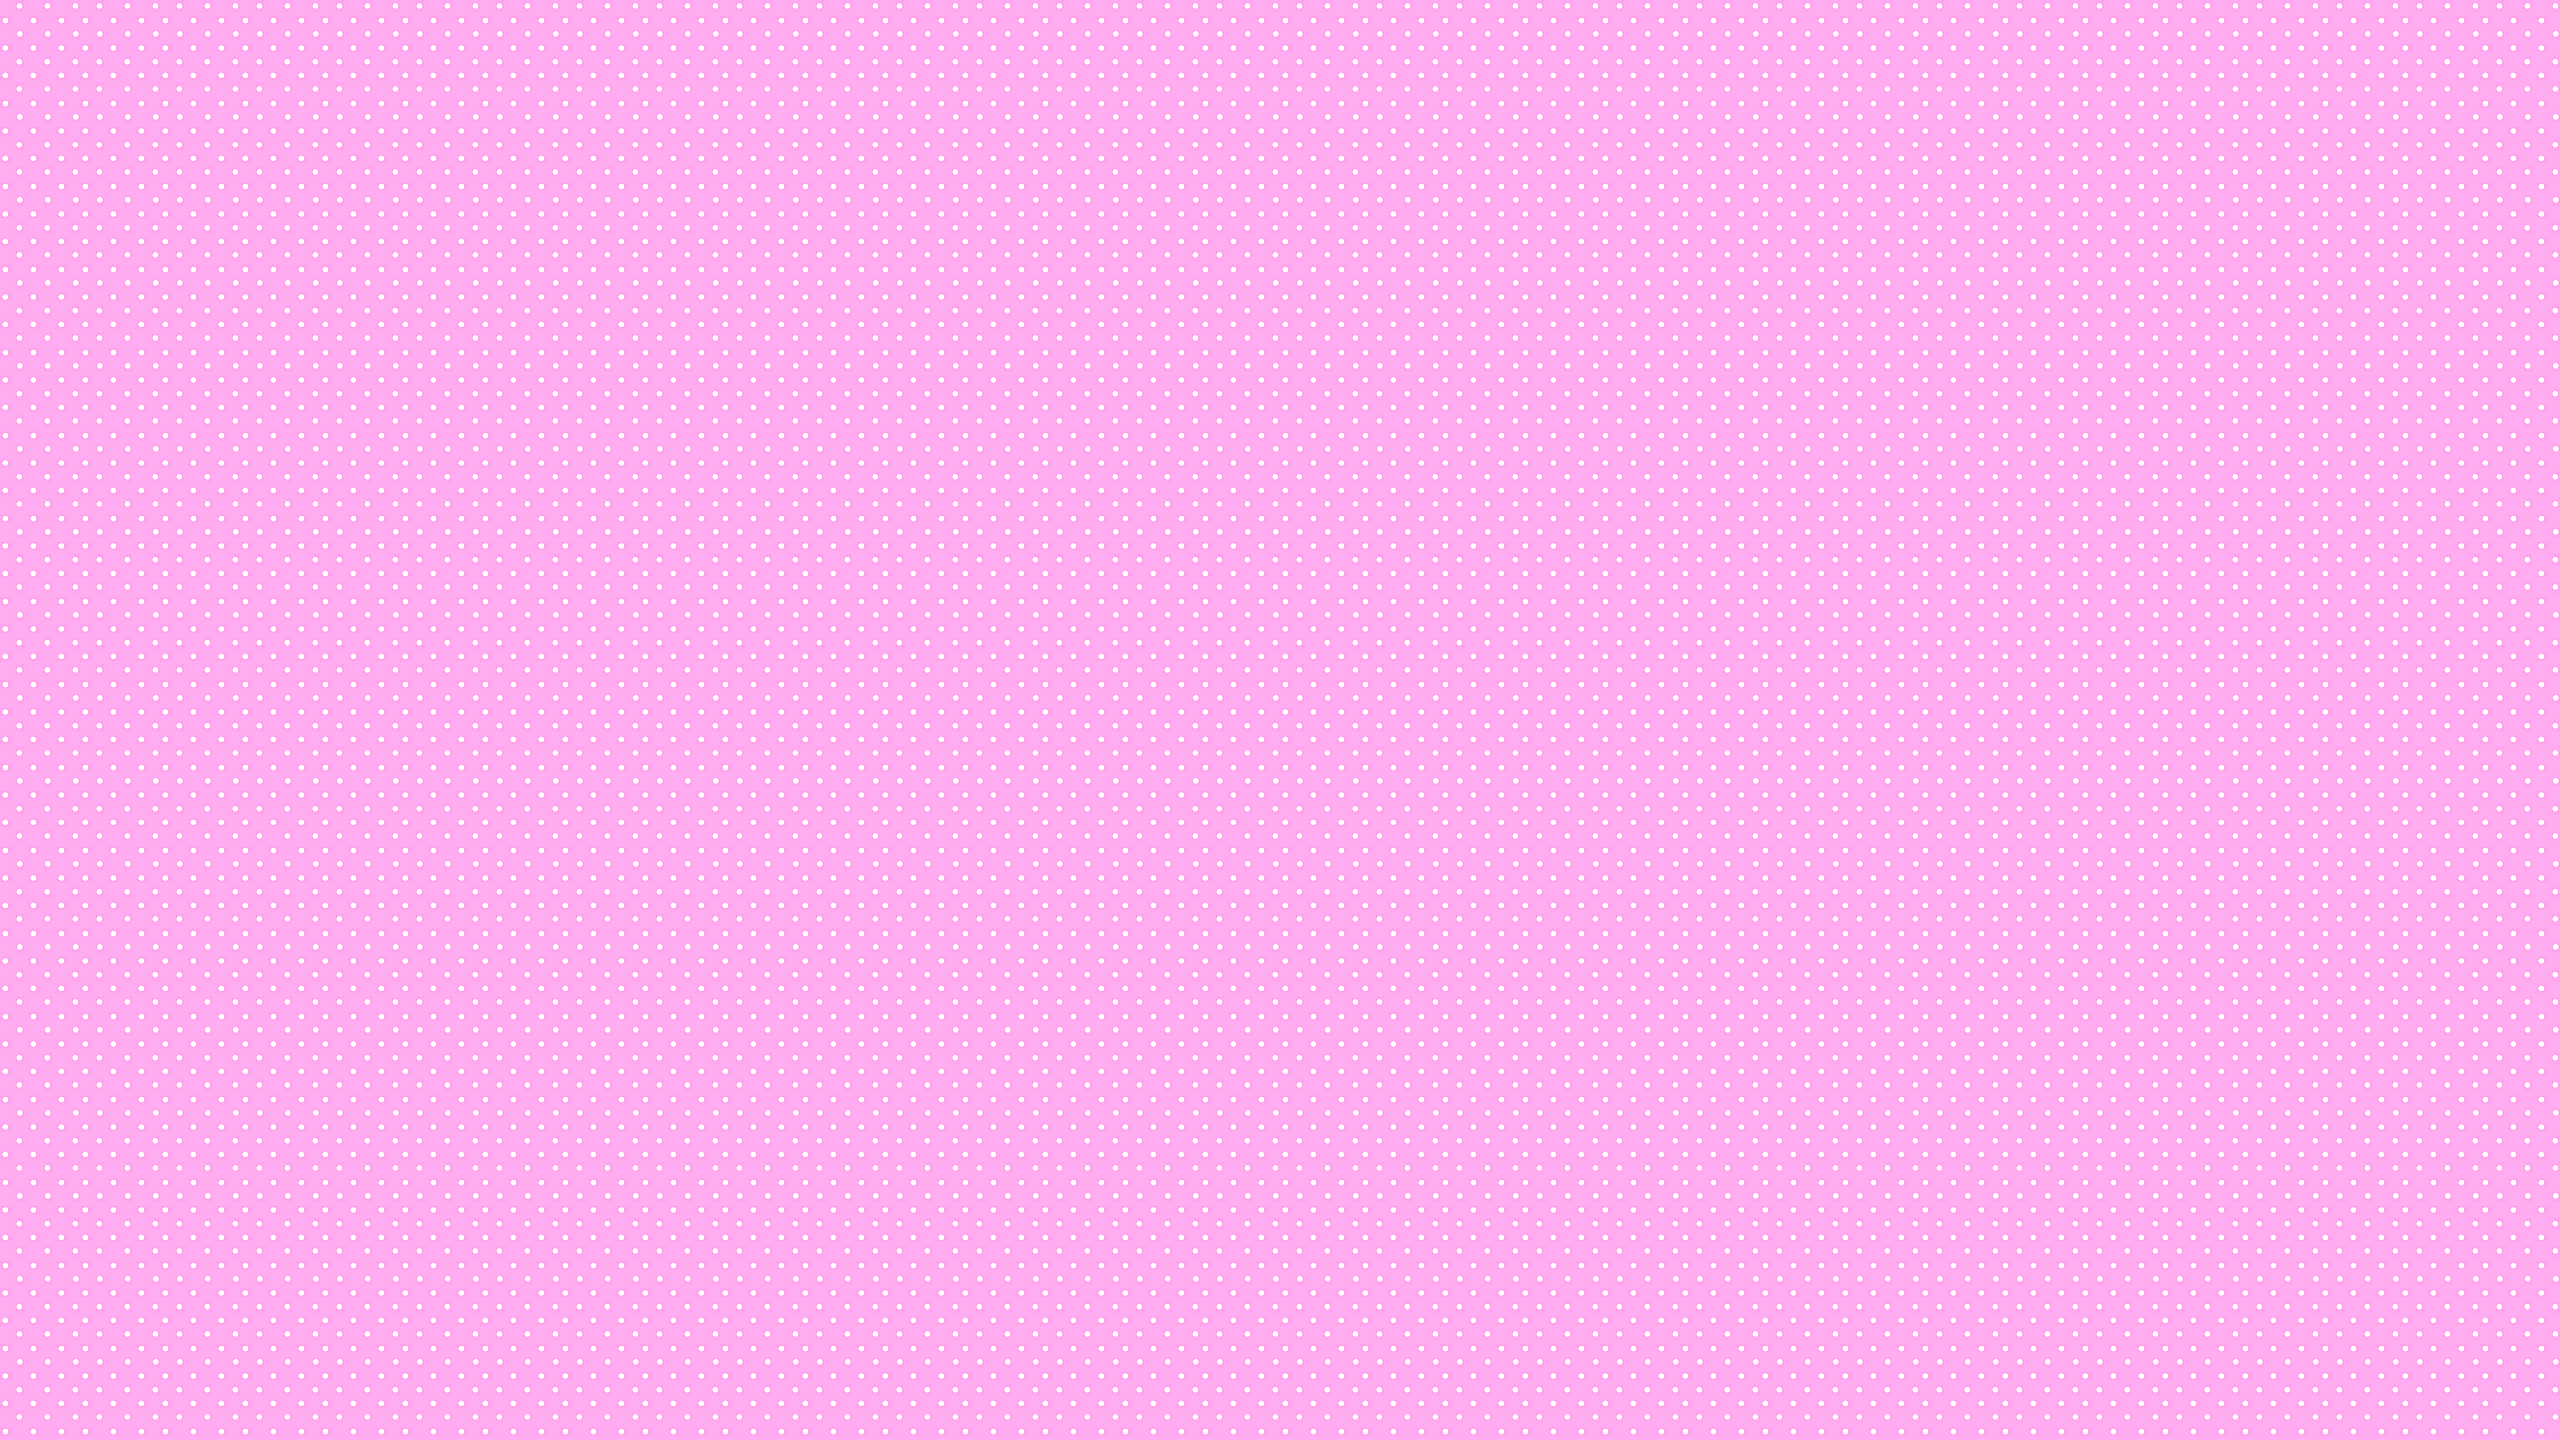 Pastel Pink Dots Desktop Wallpaper is easy Just save the wallpaper 2560x1440